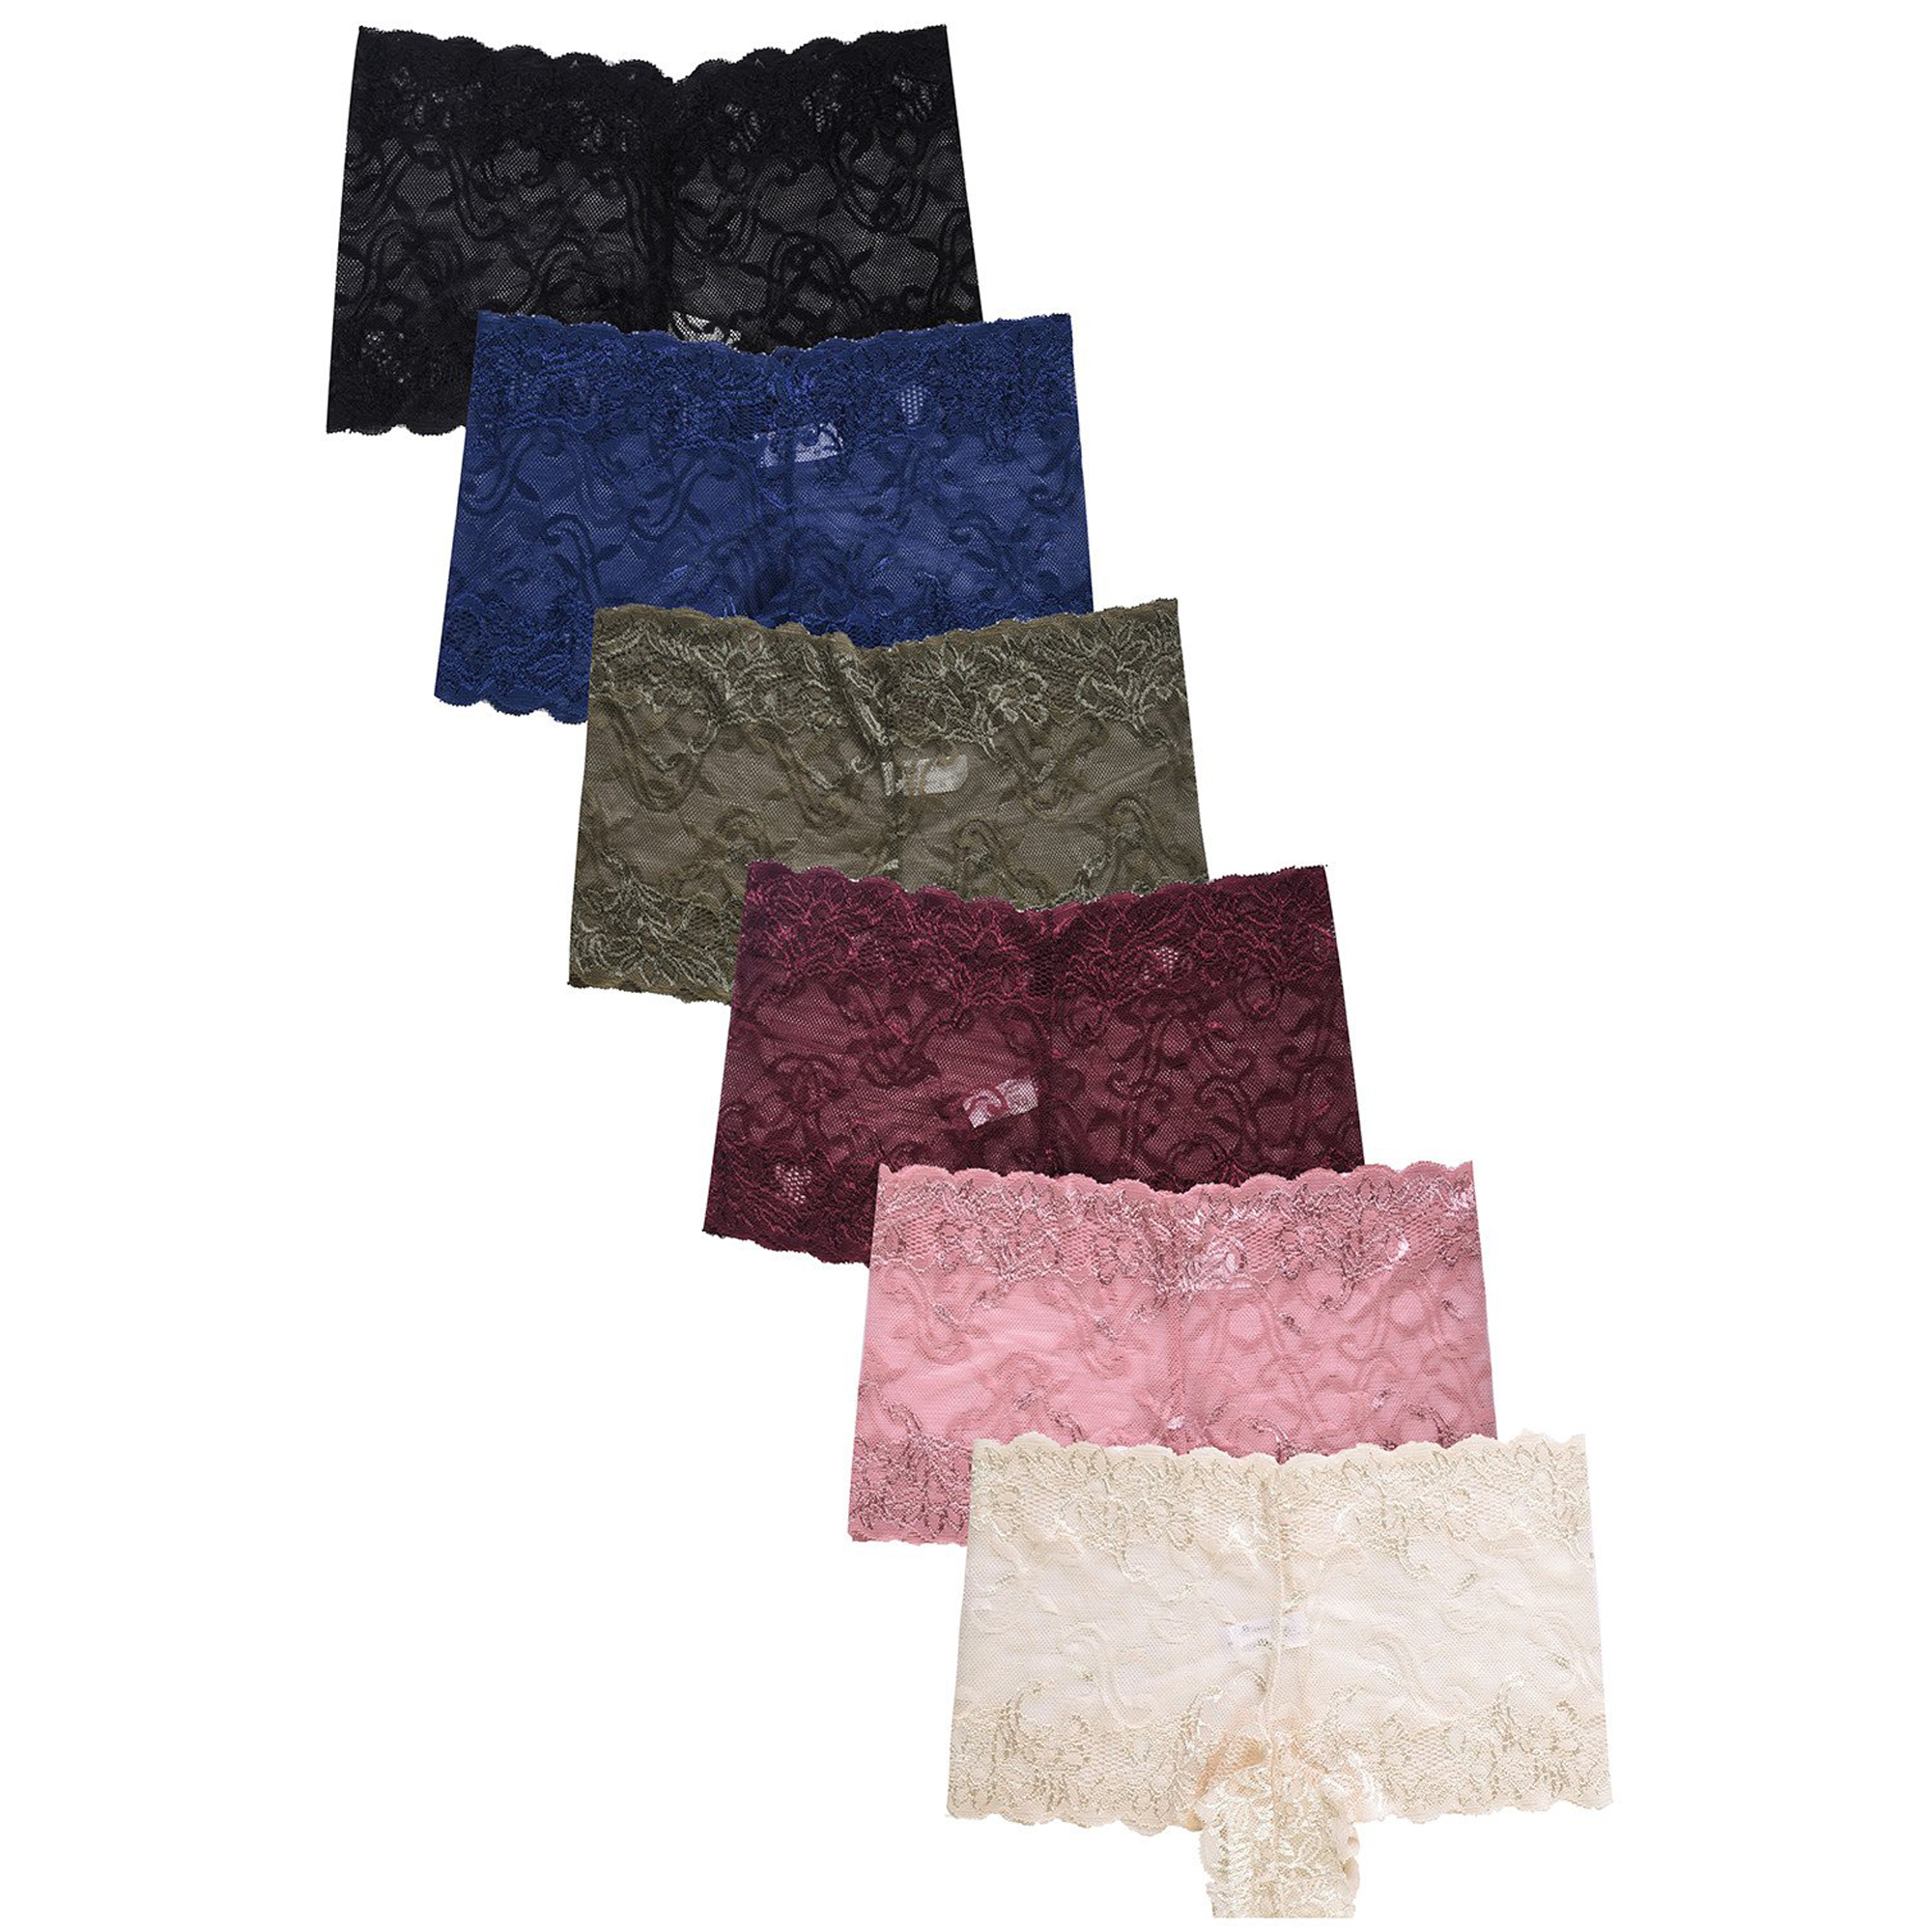 Women's Lace Boyshorts Underwear Multi Pack 6 Sexy Floral Panties | eBay